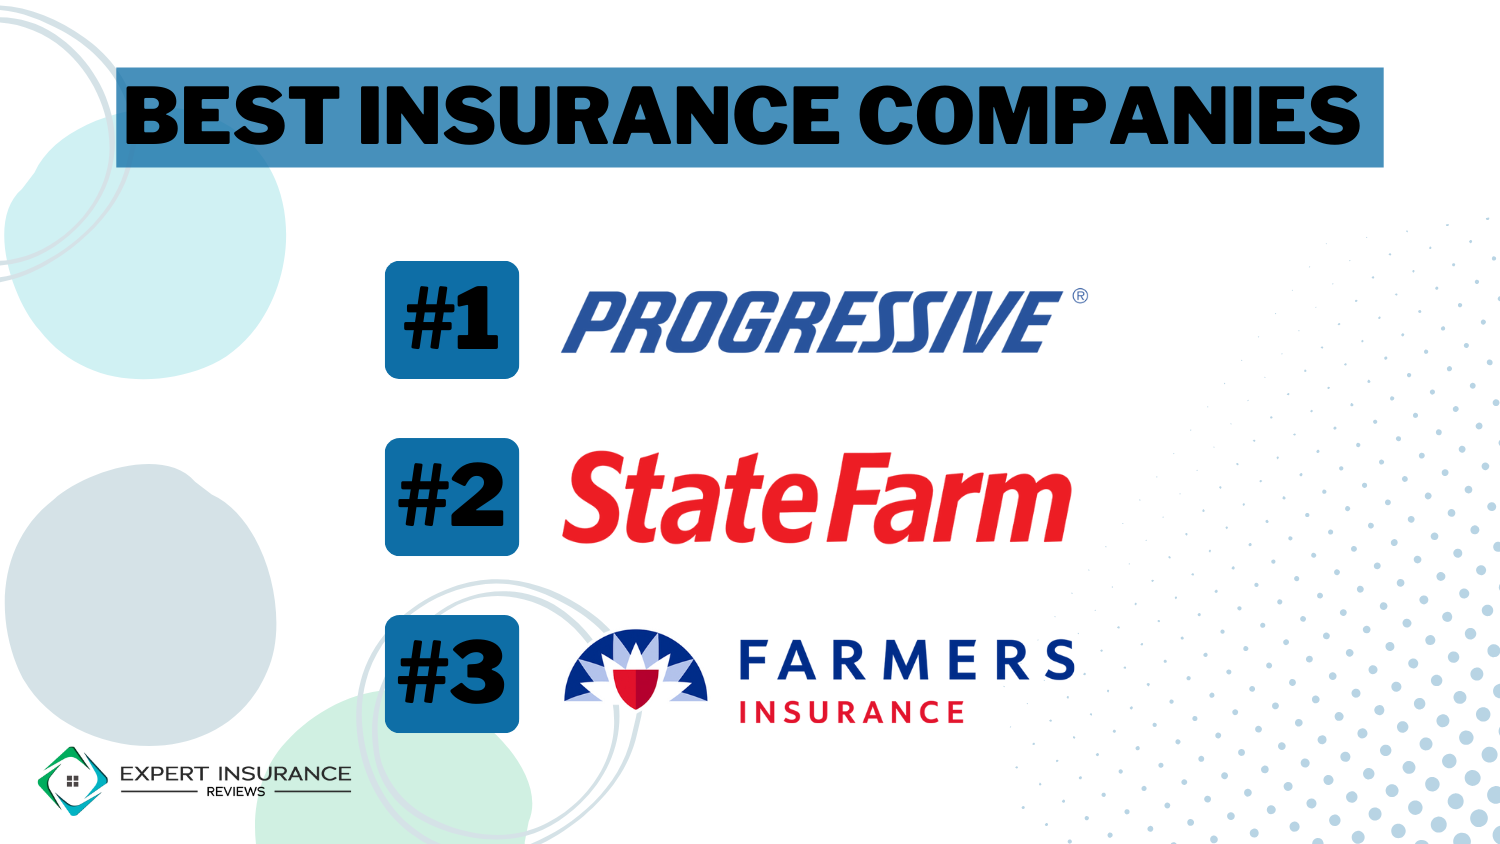 9 Best Insurance Companies: Progressive, State Farm, and Farmers